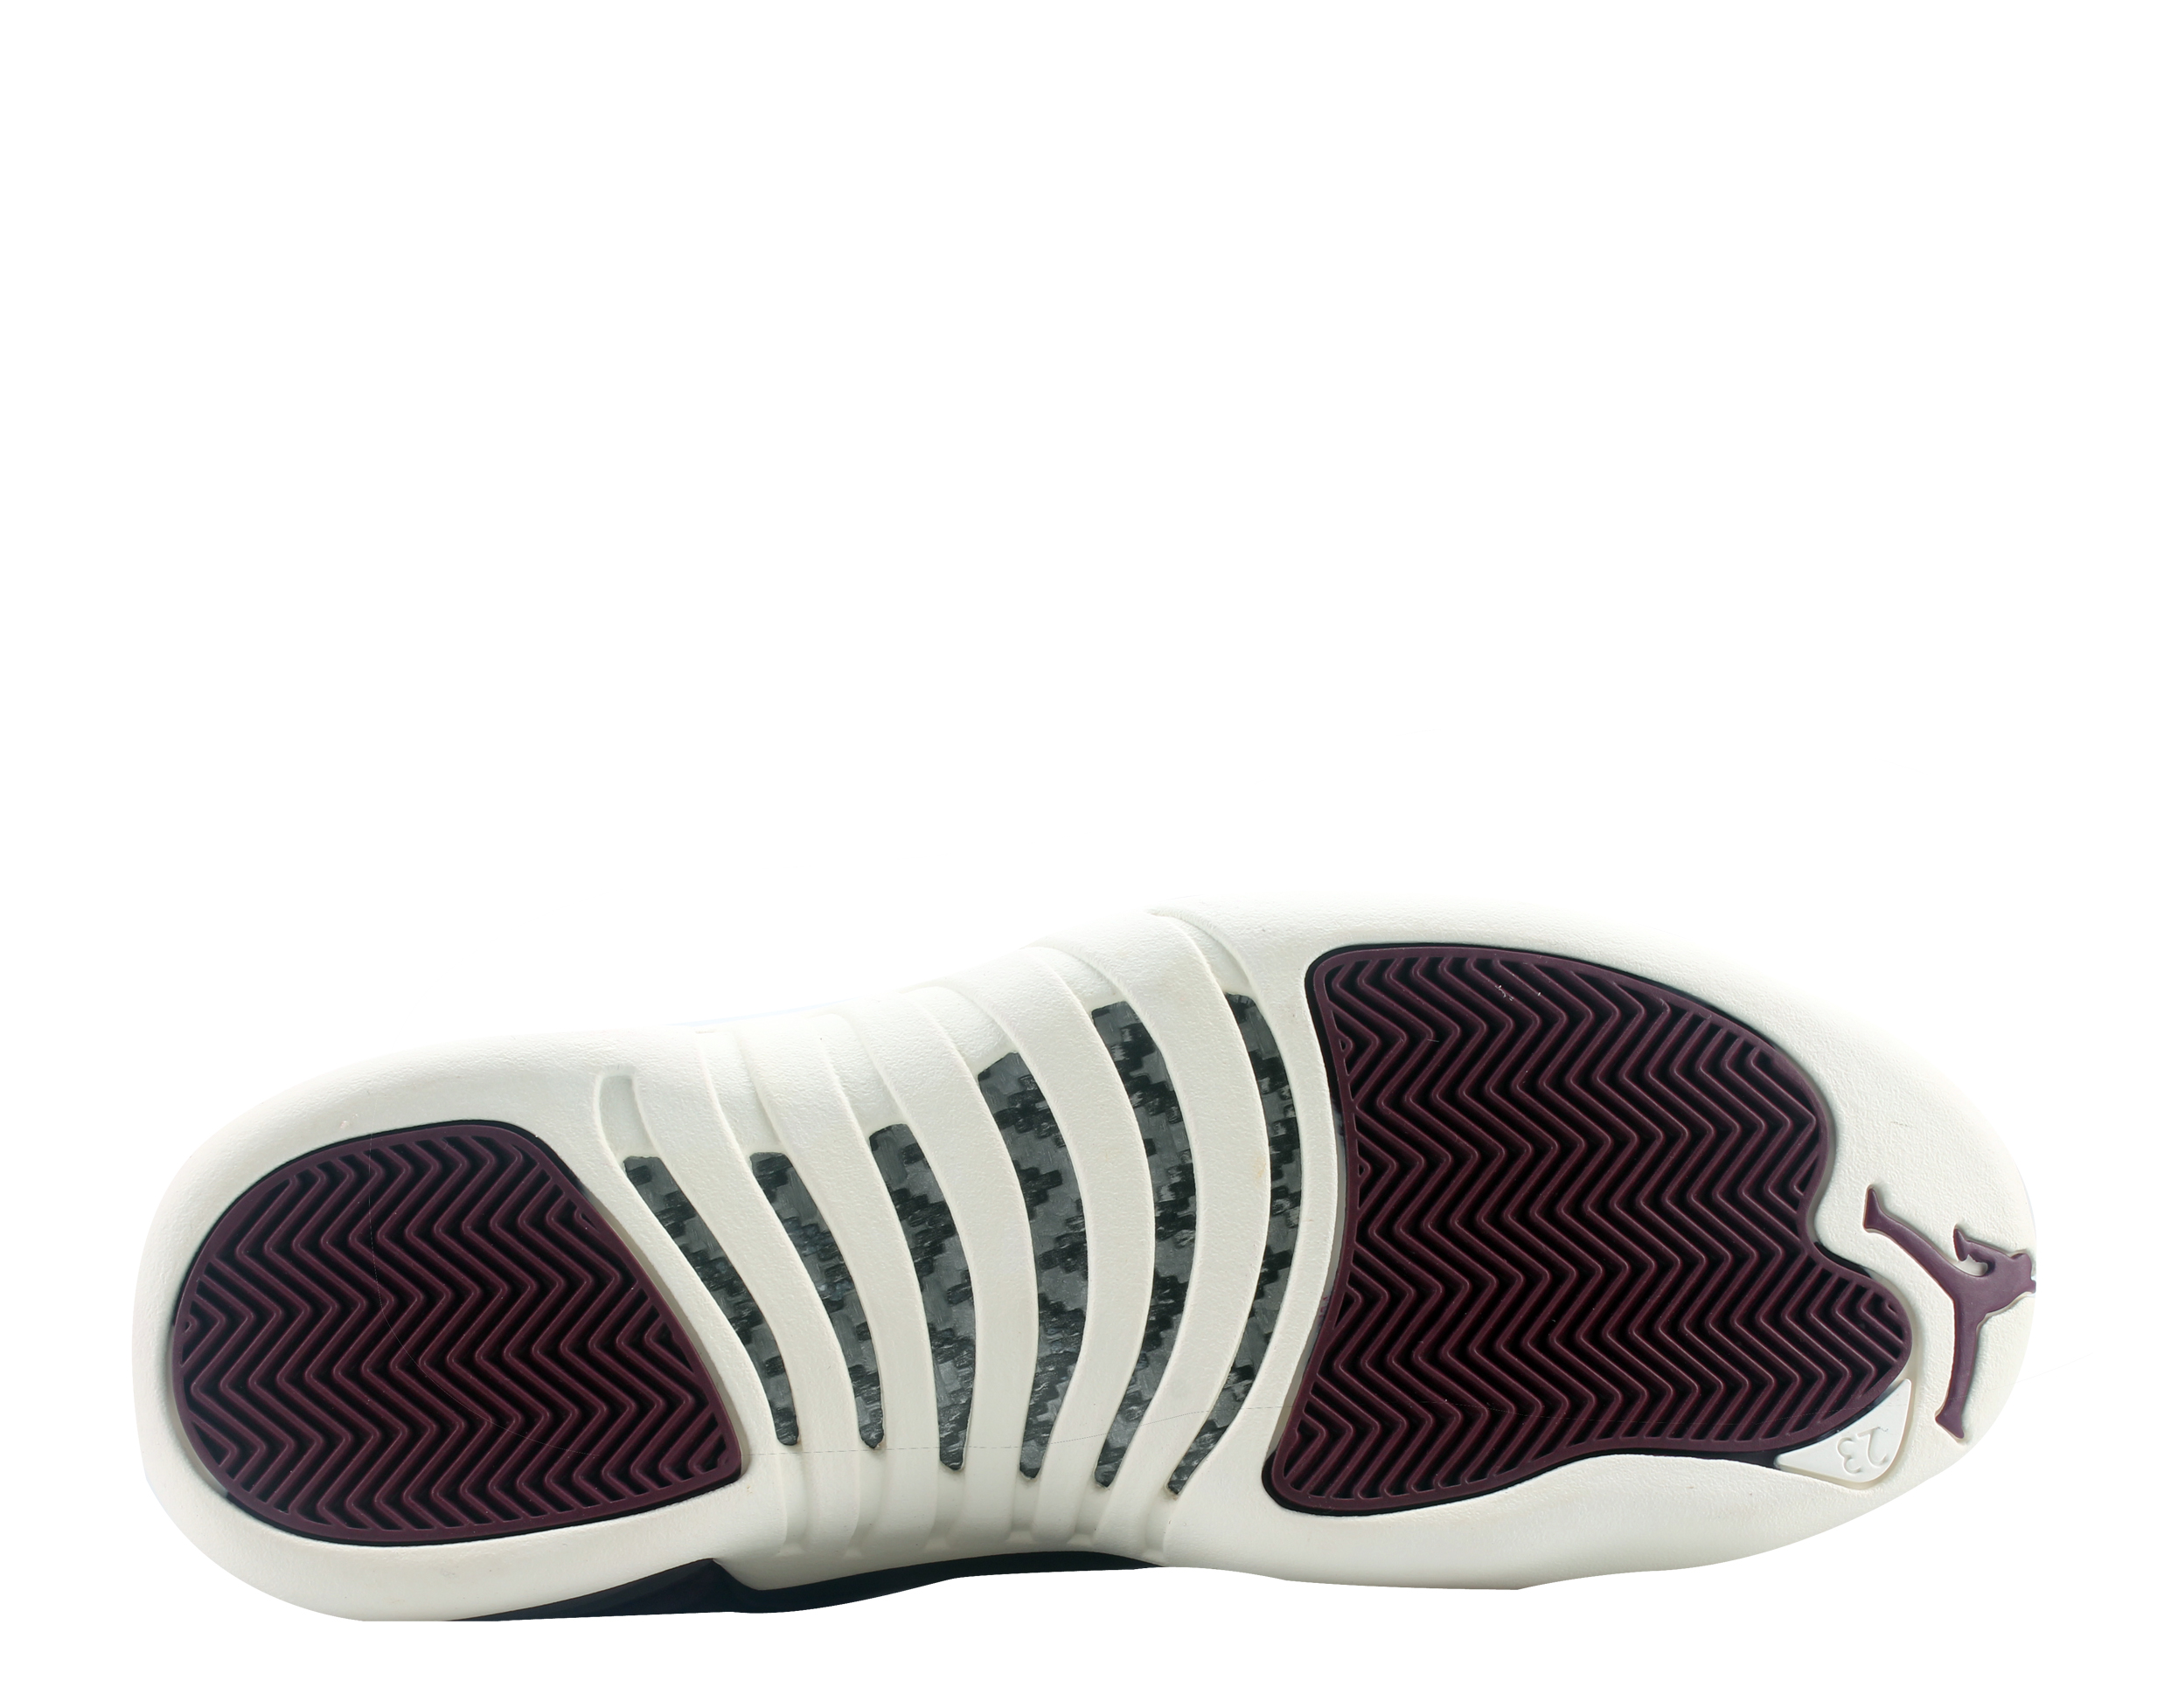 Nike Air Jordan 12 Retro Men's Basketball Shoes Size 9 - image 5 of 6